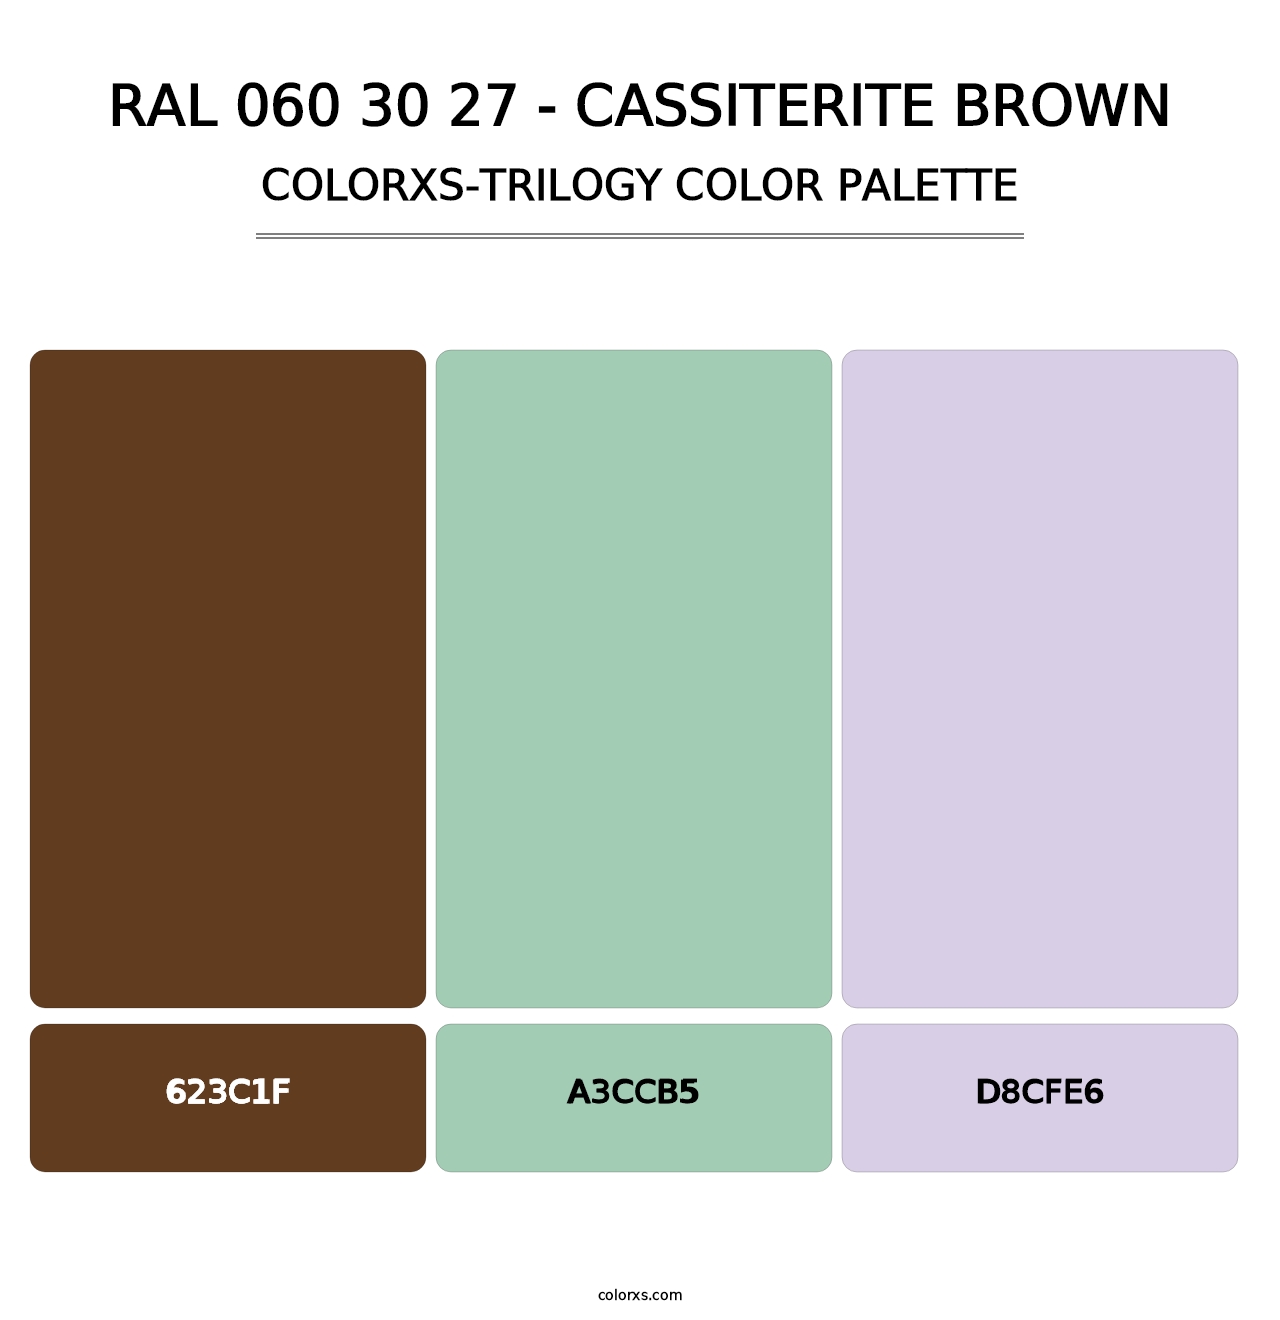 RAL 060 30 27 - Cassiterite Brown - Colorxs Trilogy Palette